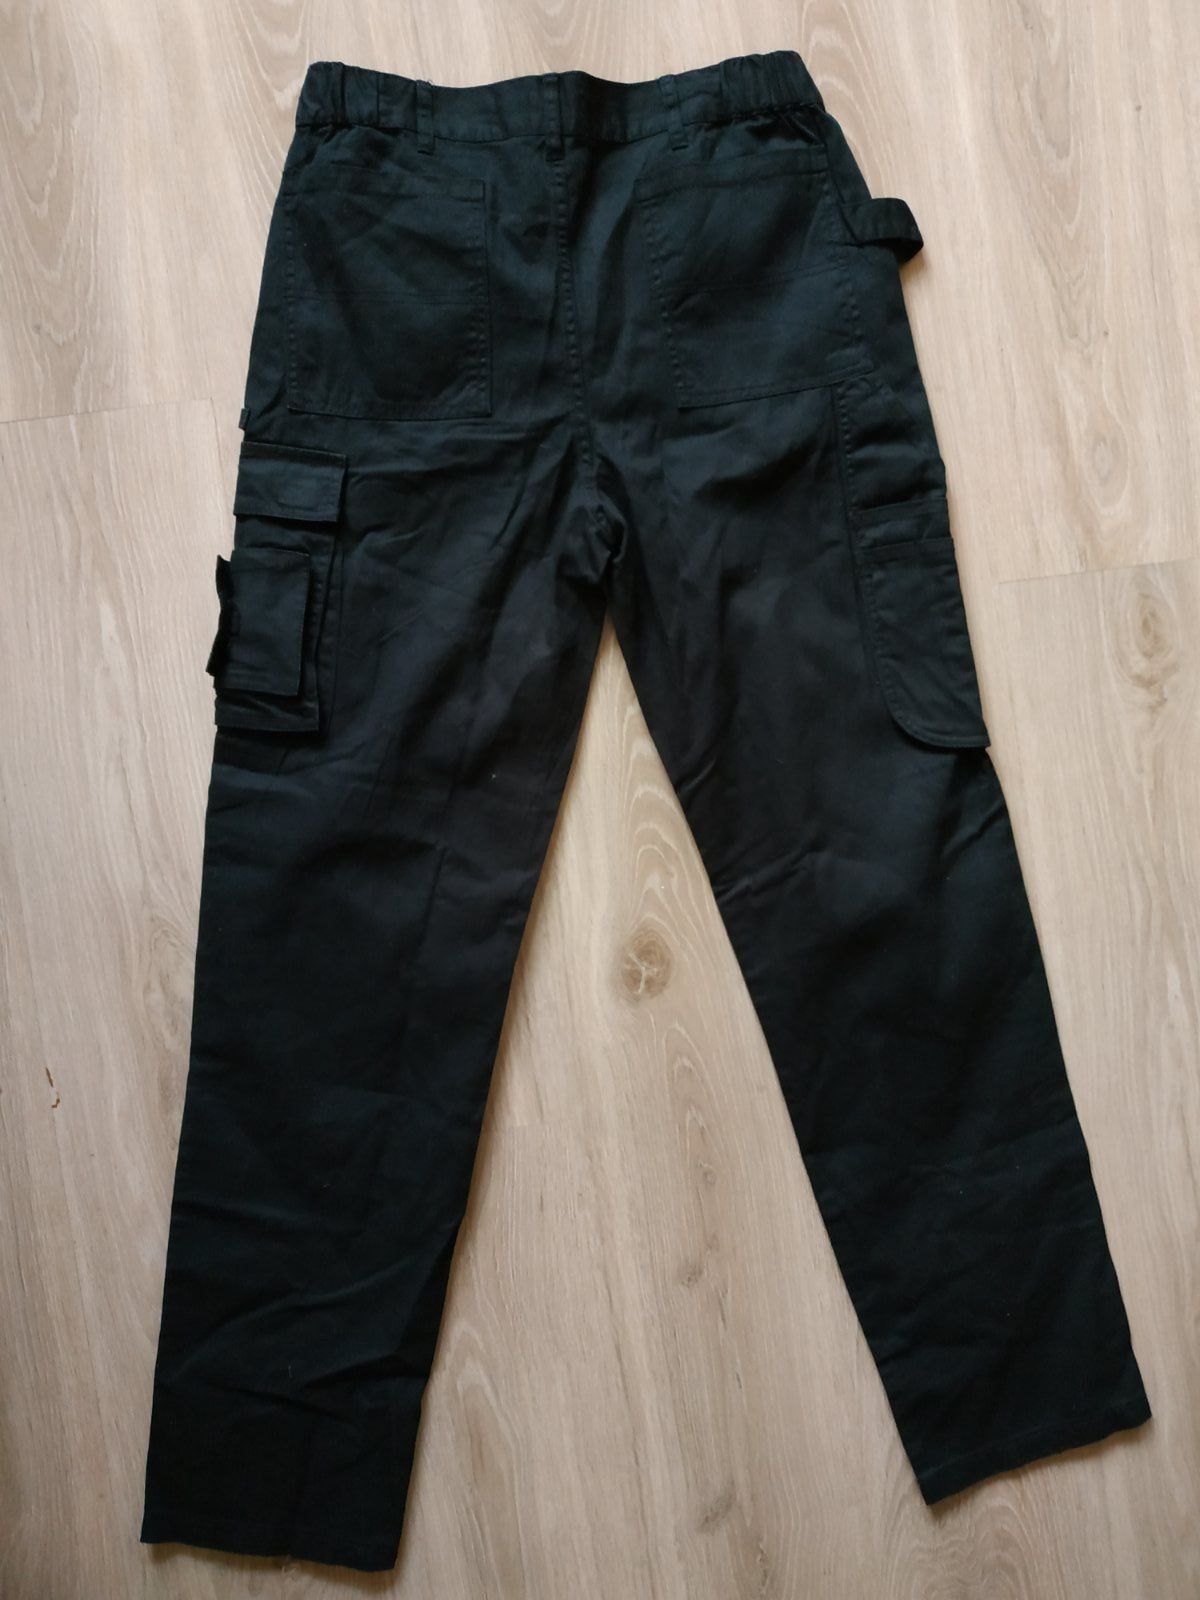 work wear штаны рабочие размер 34/33 (48 -50), новые